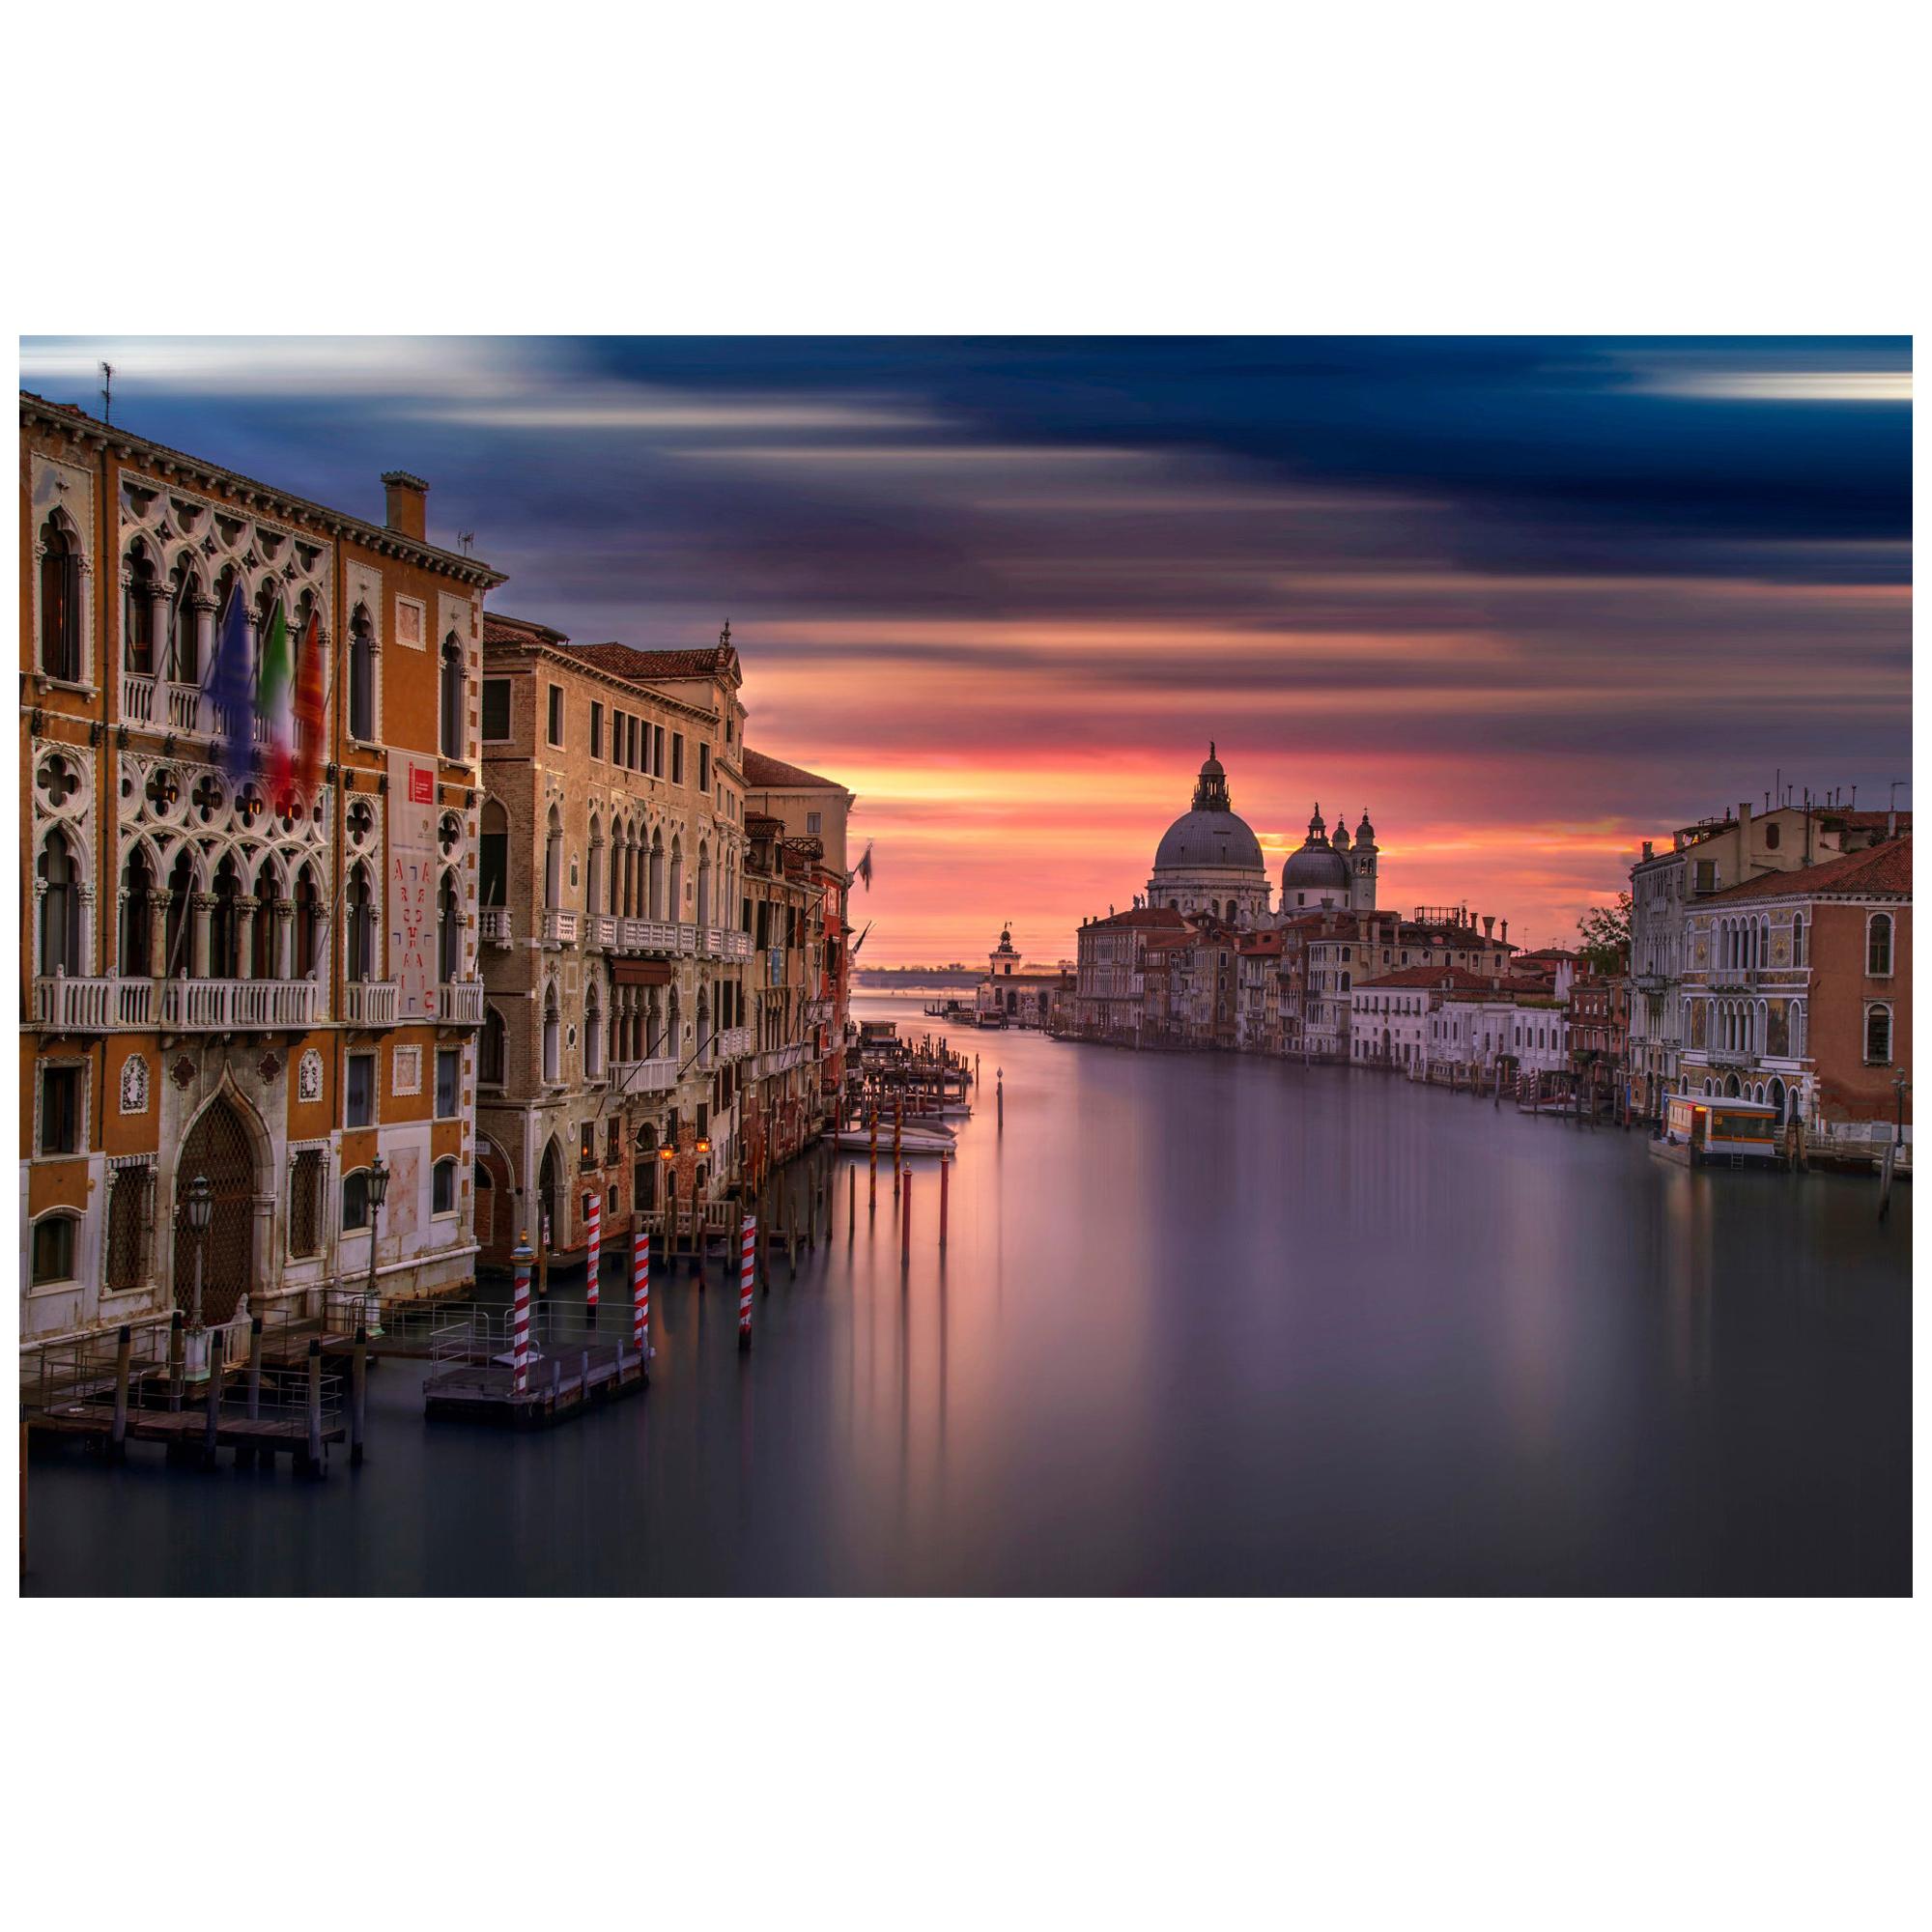 Venice Sunrise Color Photography, Fine Art Print by Rainer Martini